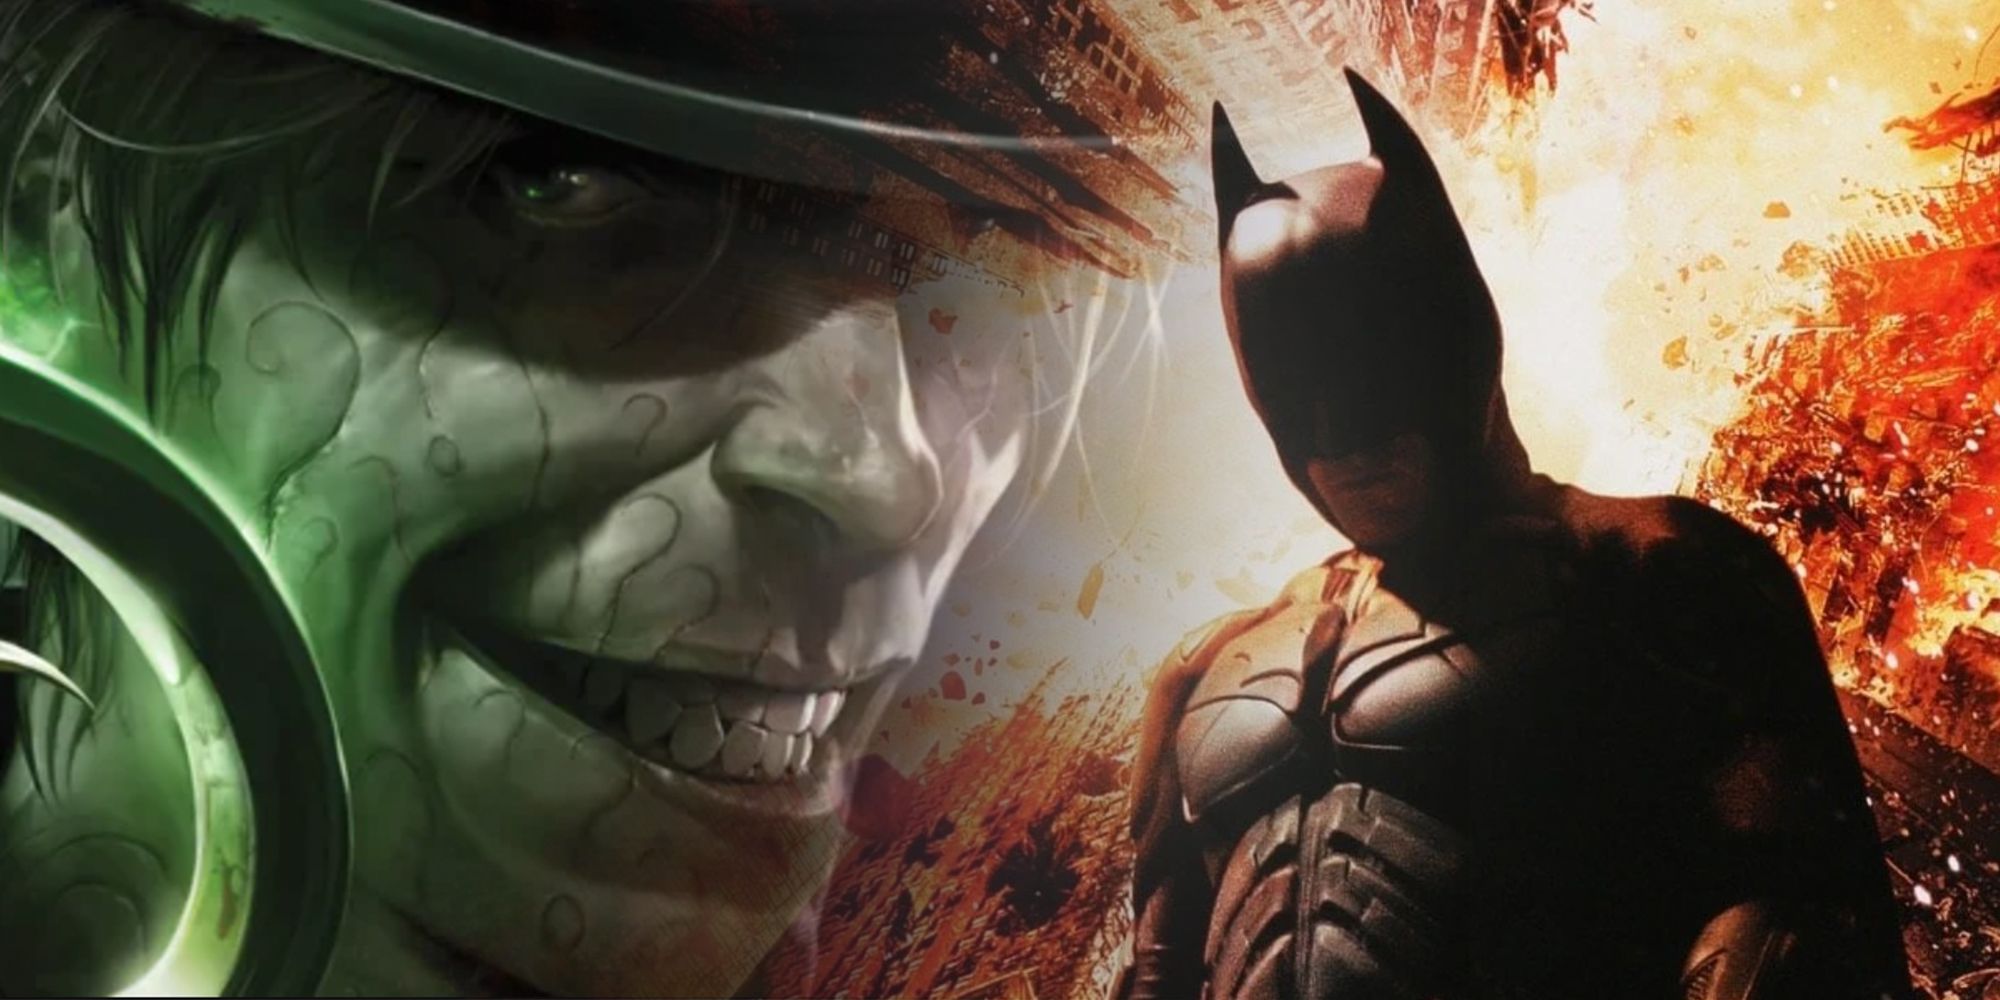 The Riddler alongside Batman as he appears on The Dark Knight Rises poster